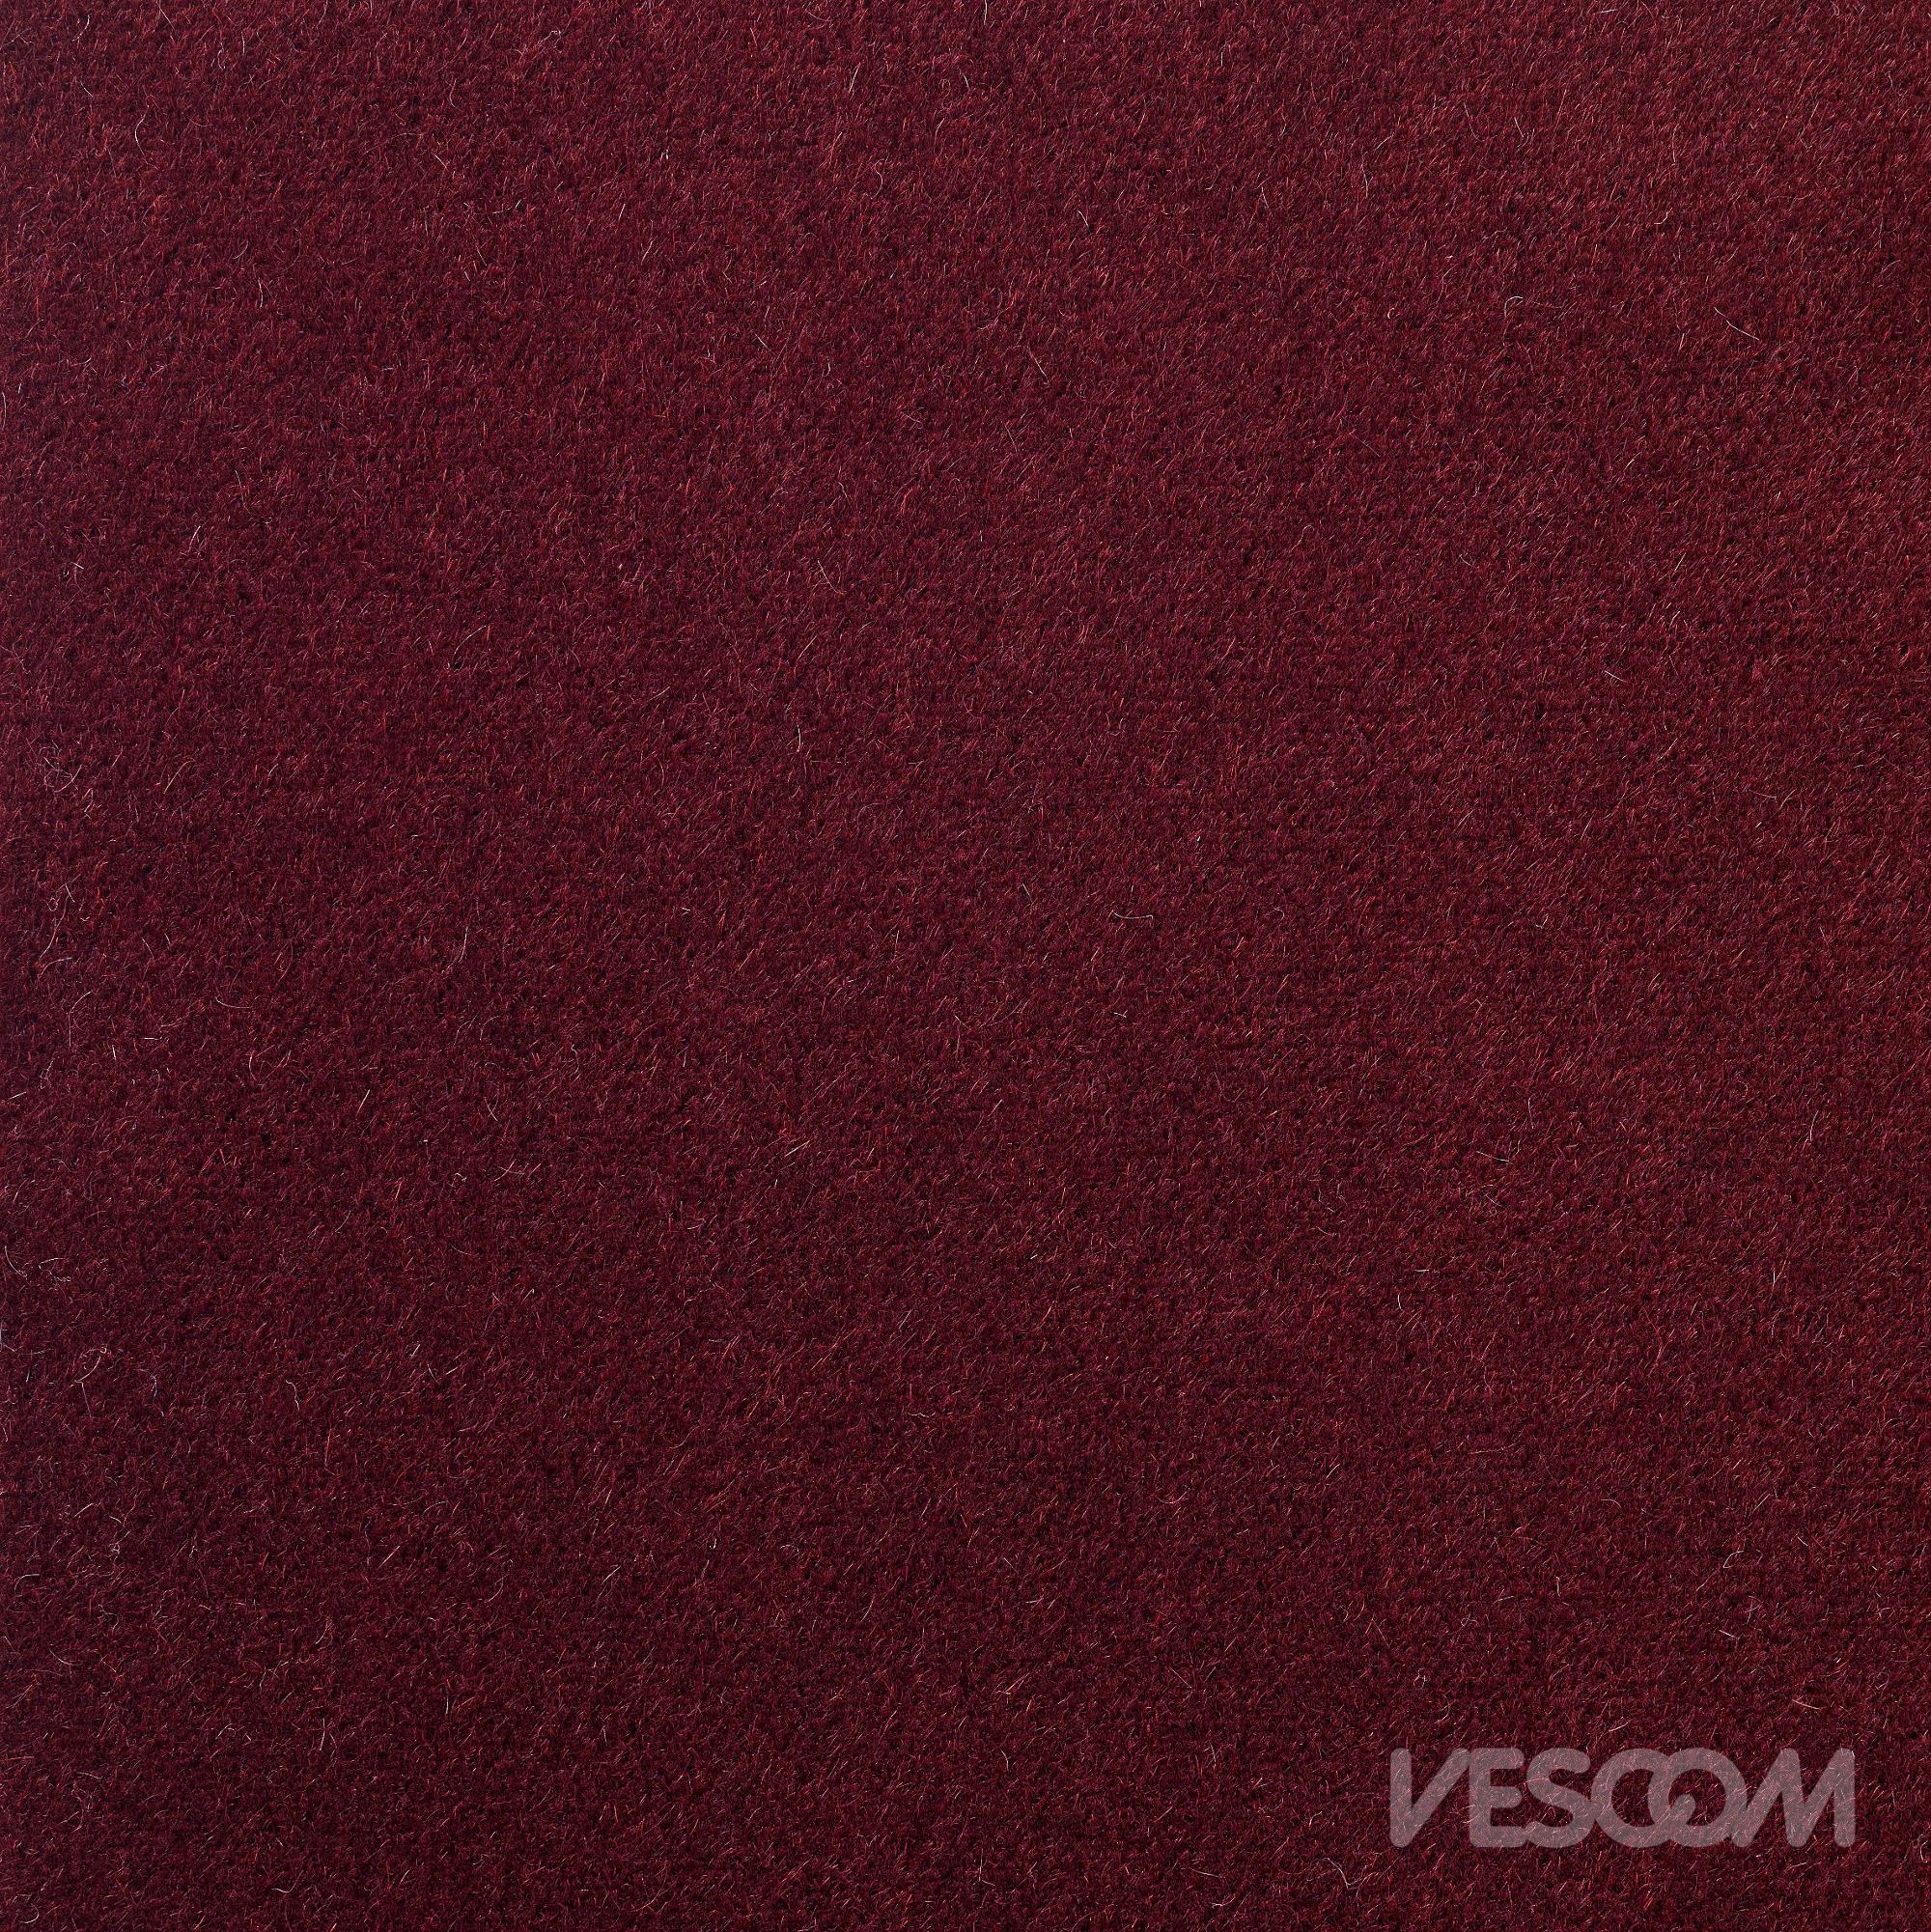 Vescom Ariana Upholstery Fabric 7061.32